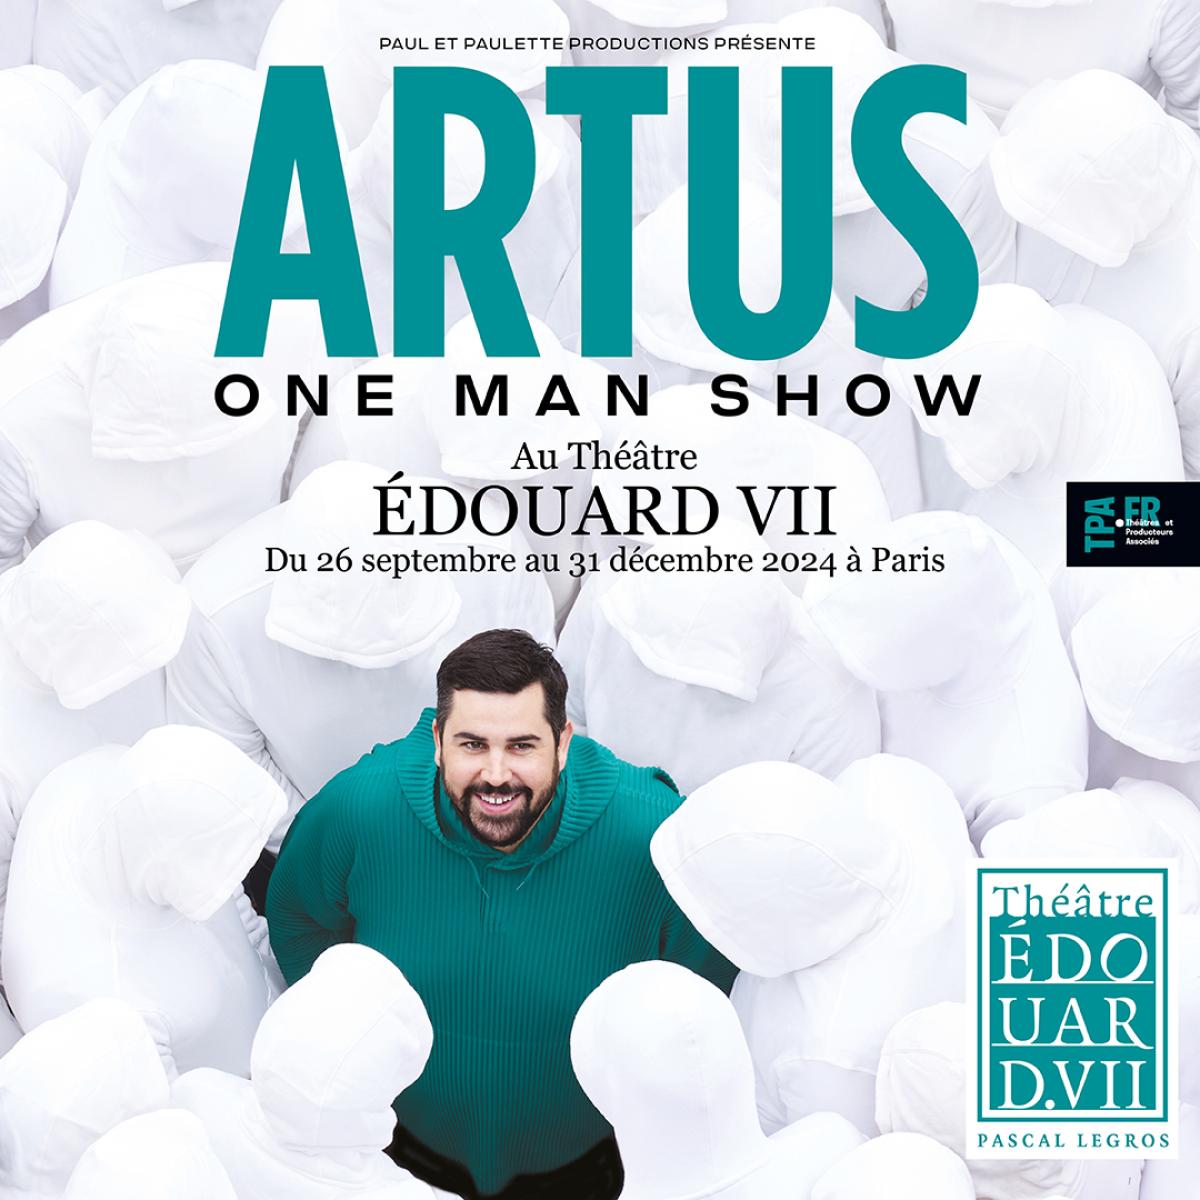 Artus - One Man Show en Theatre Edouard VII Tickets